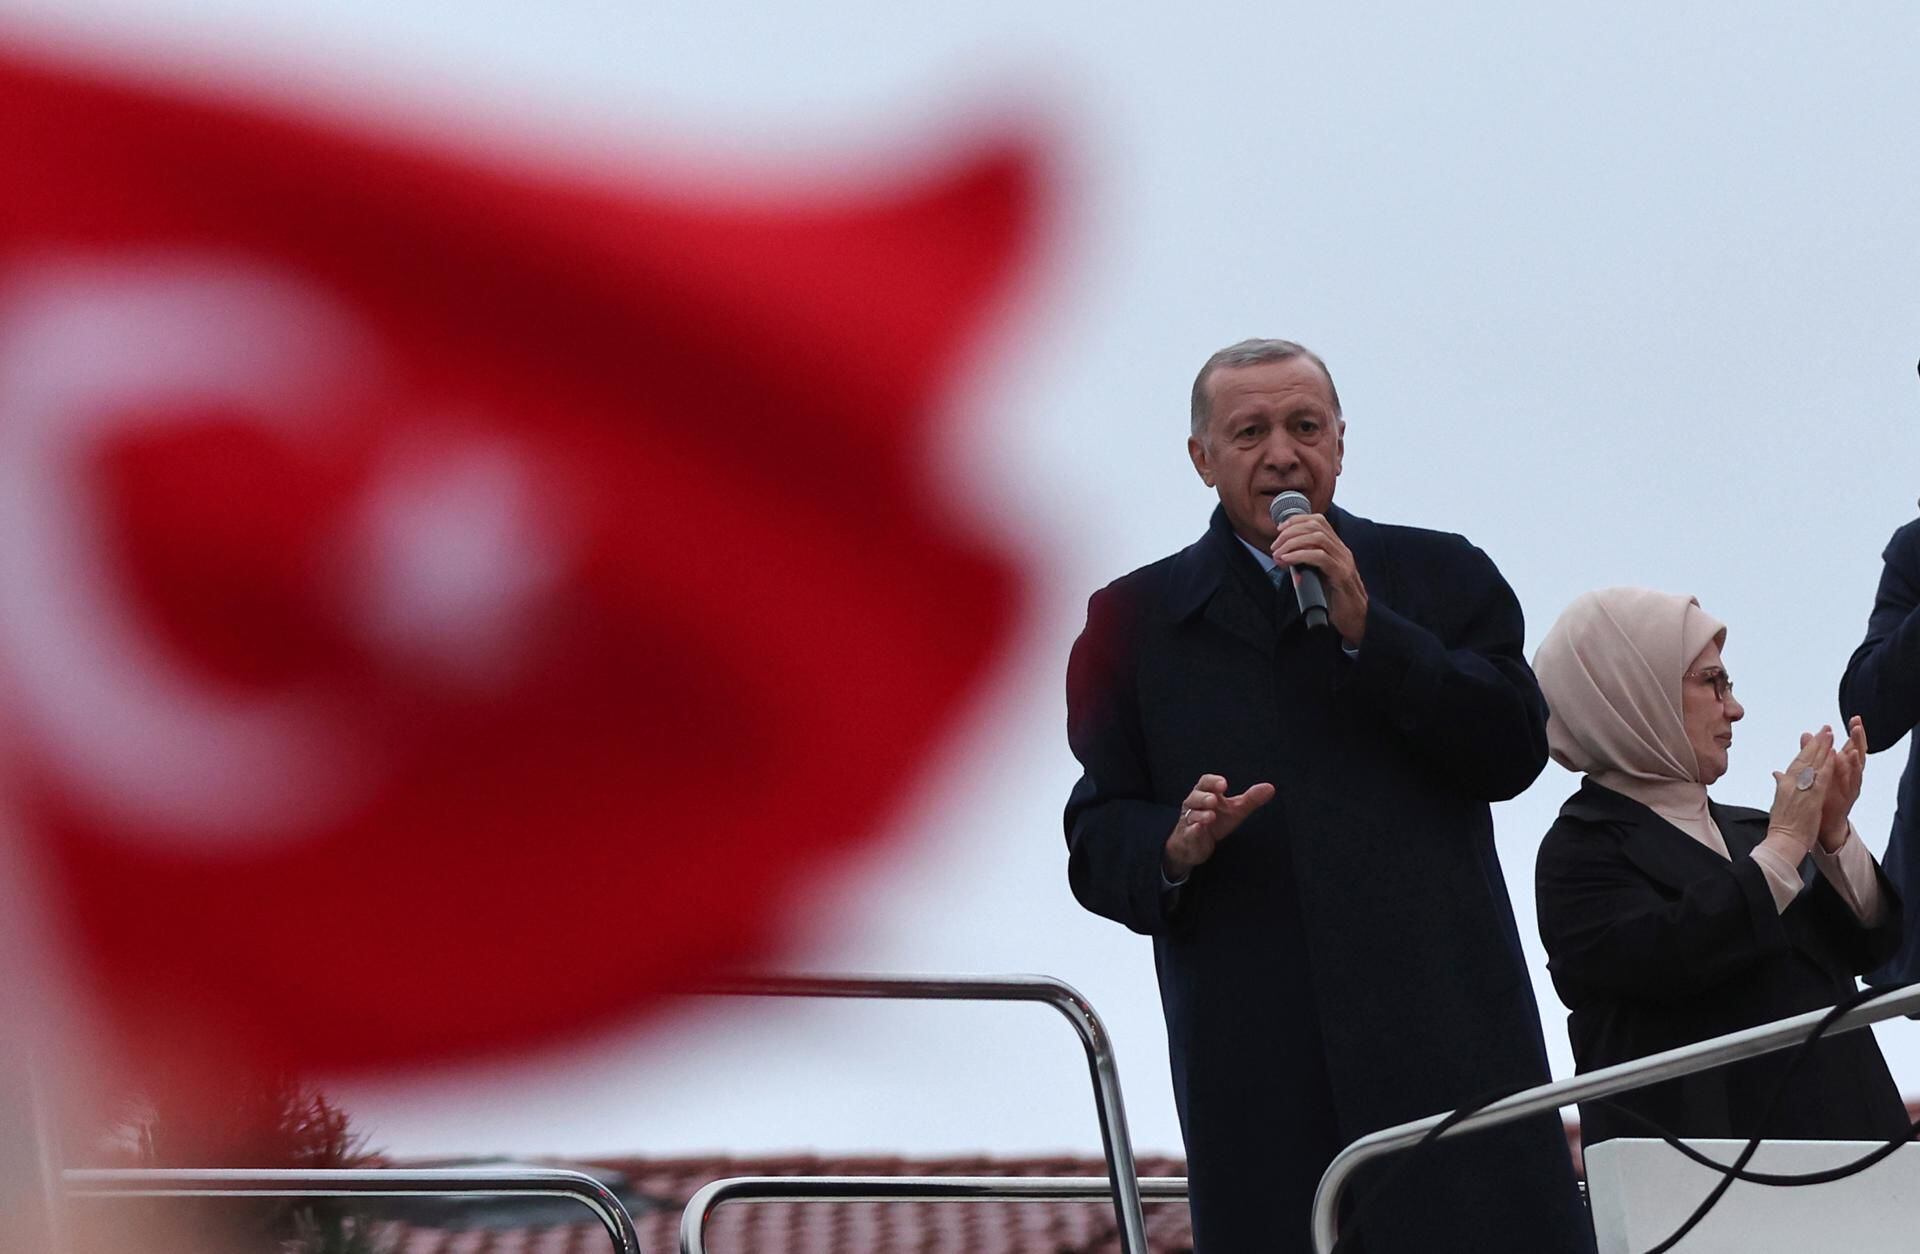 Türkiye: Erdogan wins 5th term as president, extending rule into 3rd decade